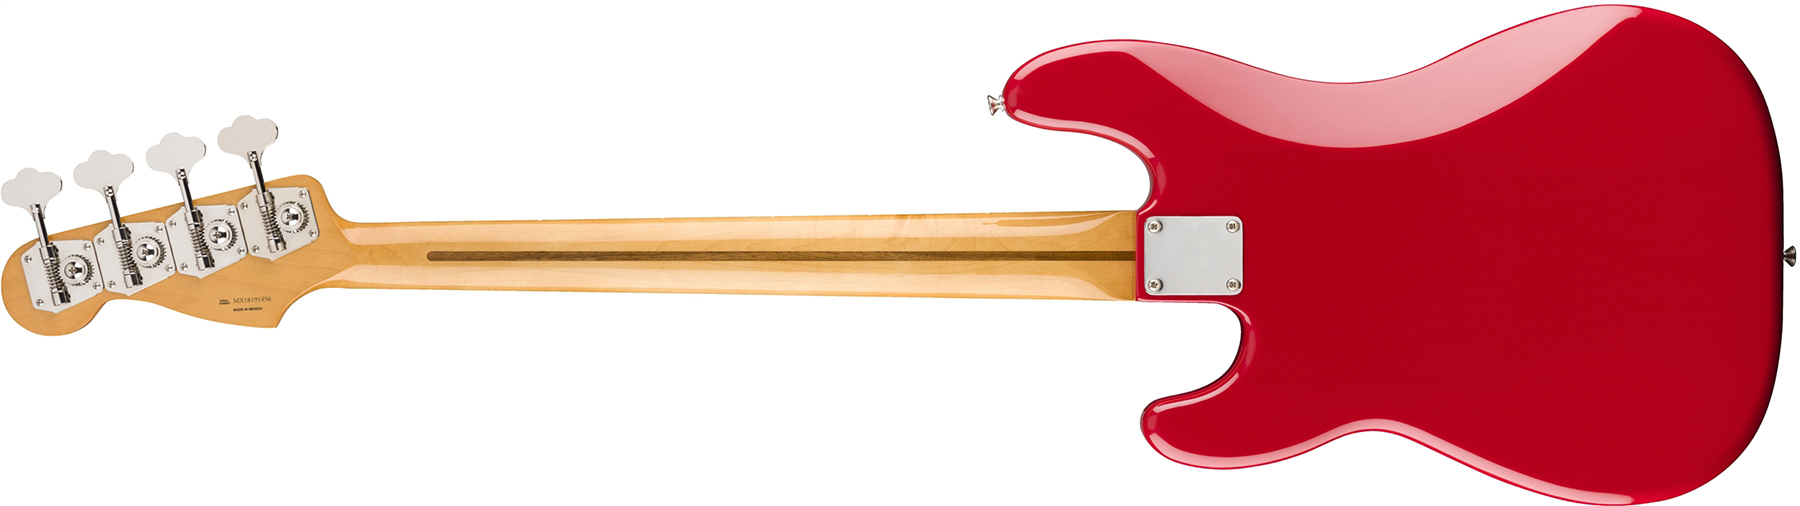 Fender Precision Bass 50s Vintera Vintage Mex Mn - Dakota Red - Basse Électrique Solid Body - Variation 1